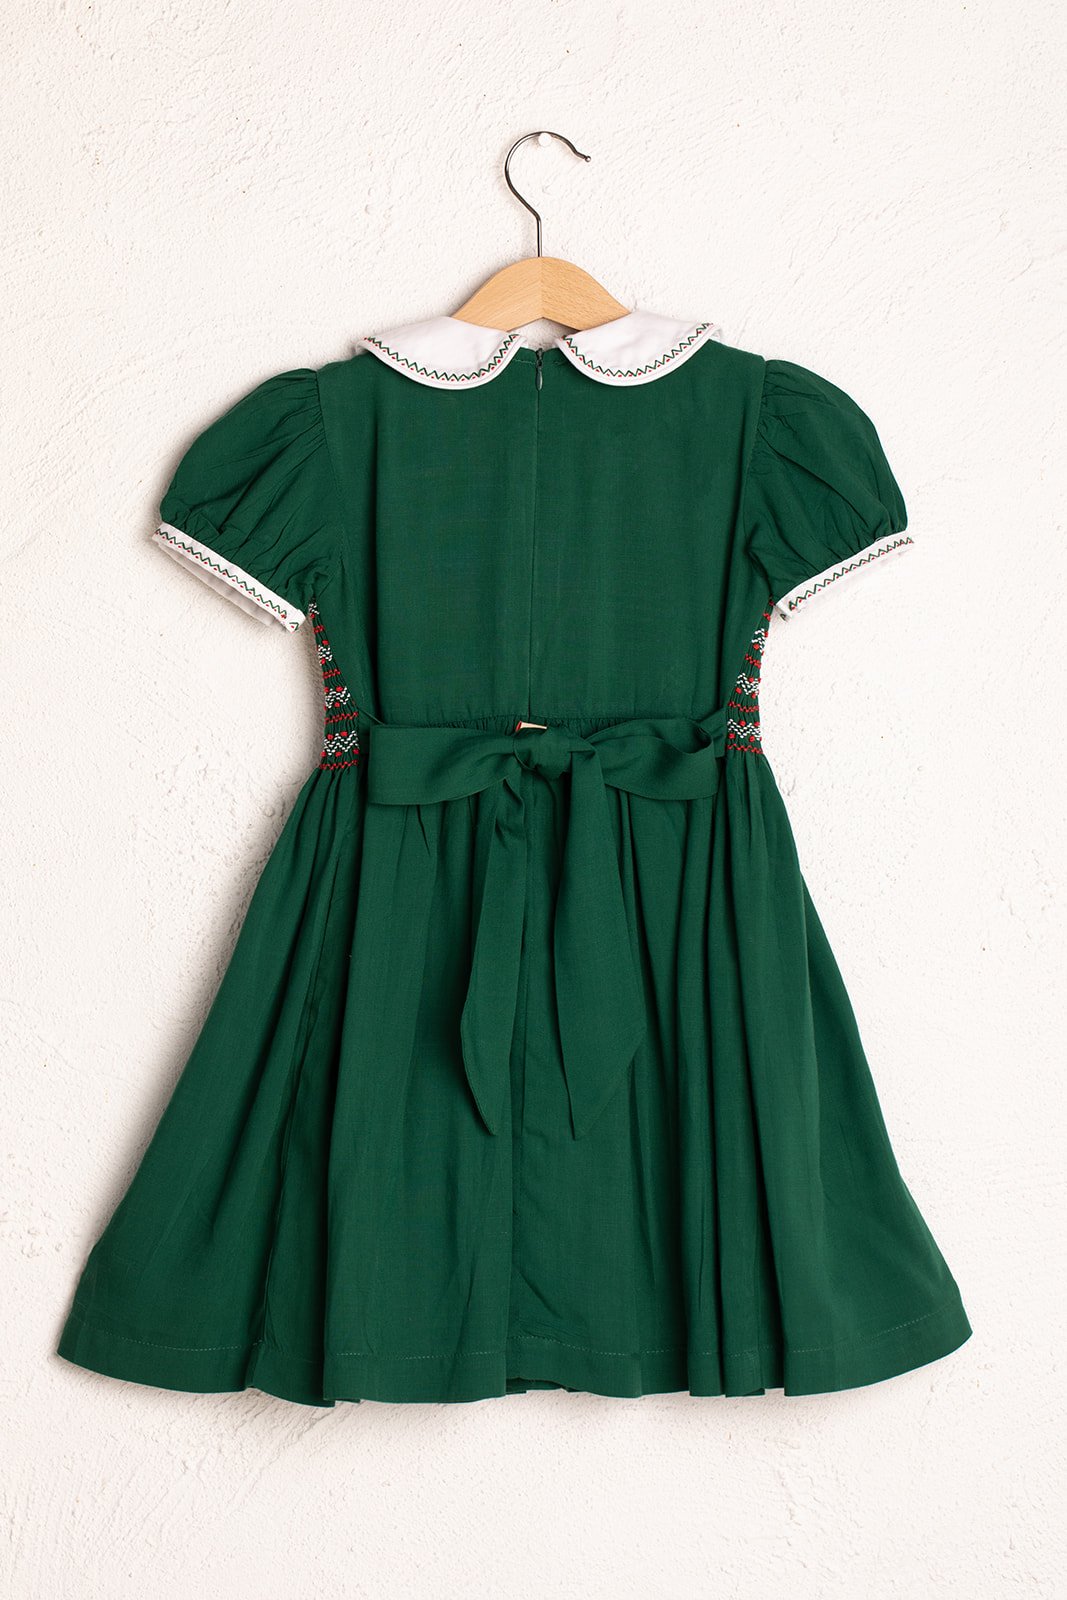 Dot & Mila Green Smocked Dress Size 3